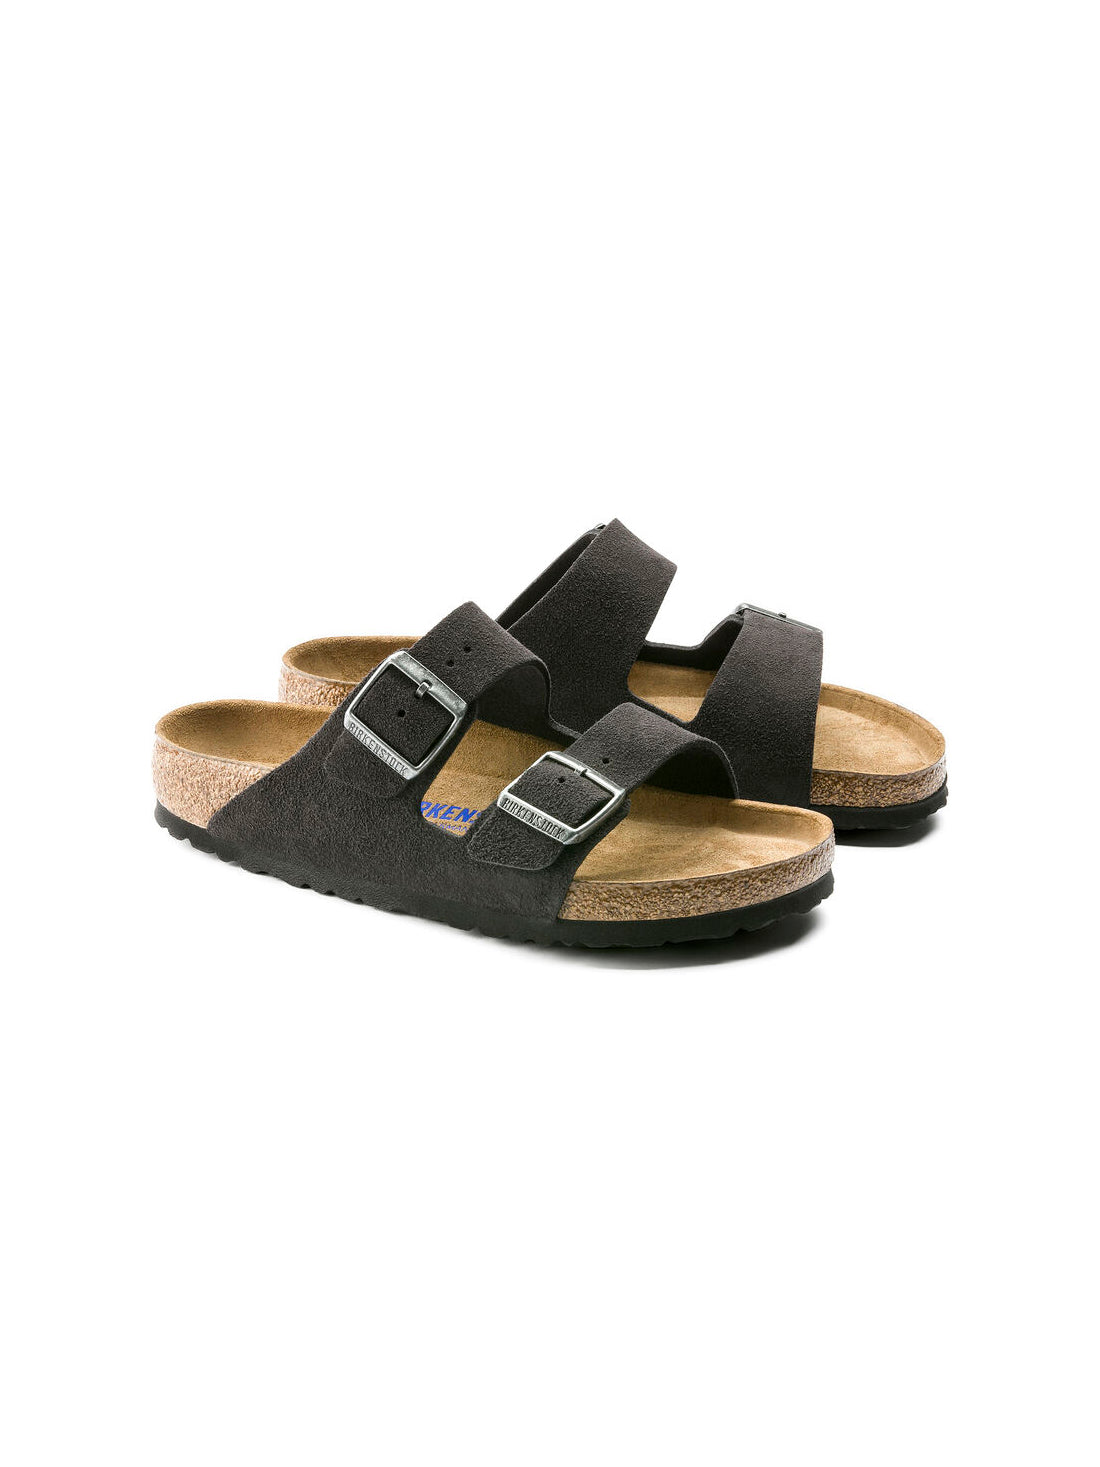 birkenstock arizona soft footbed sandal in suede leather velvet gray narrow